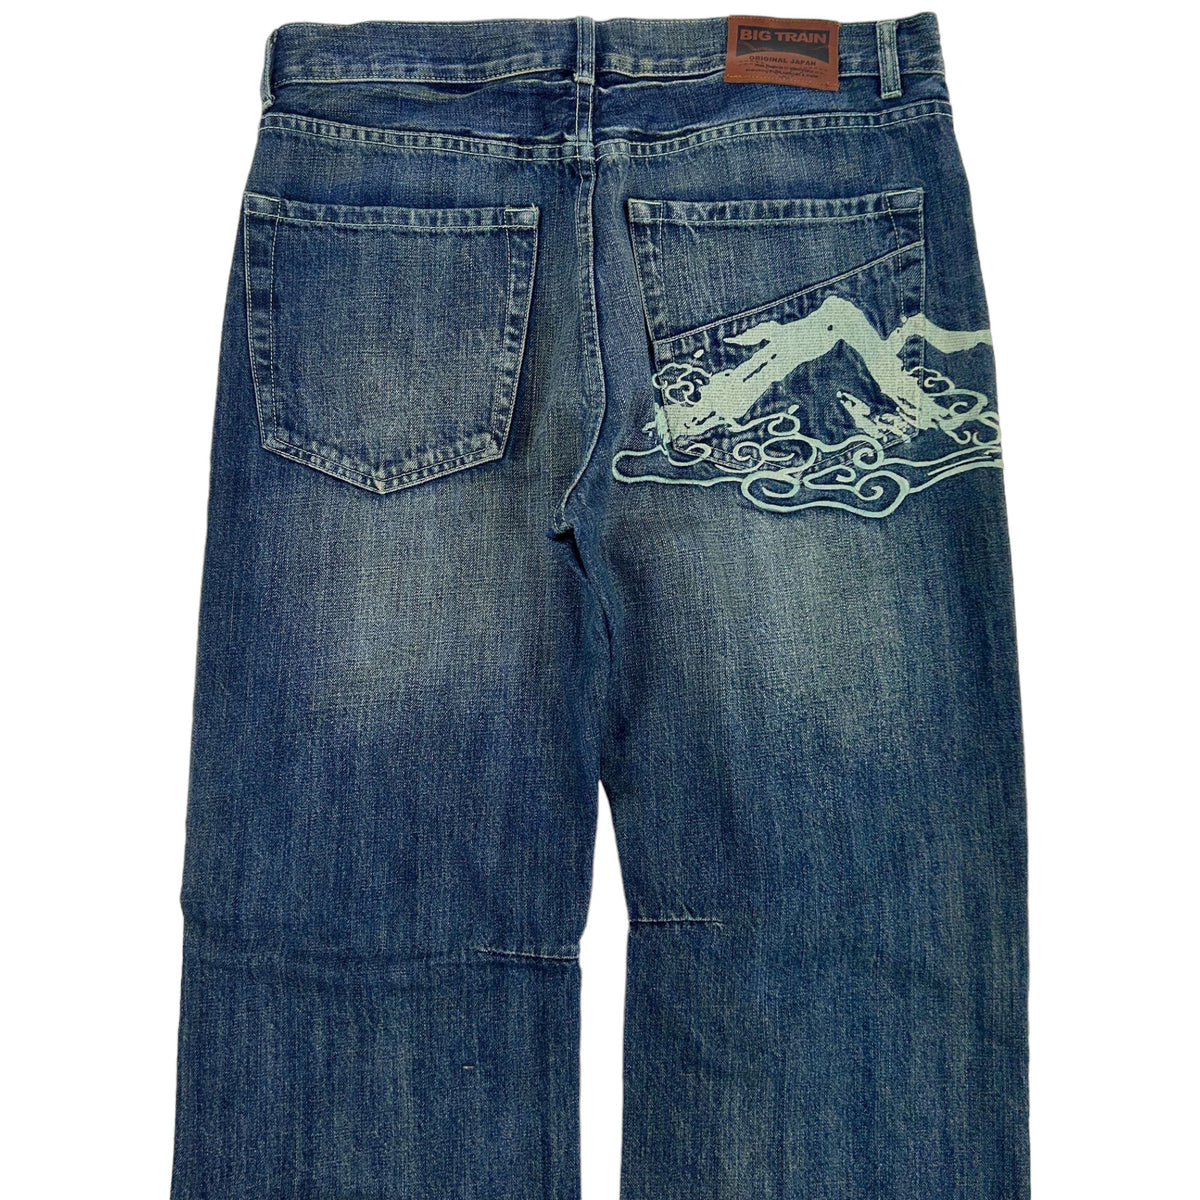 Vintage Mountain Big Train Japanese Denim Jeans Size W34